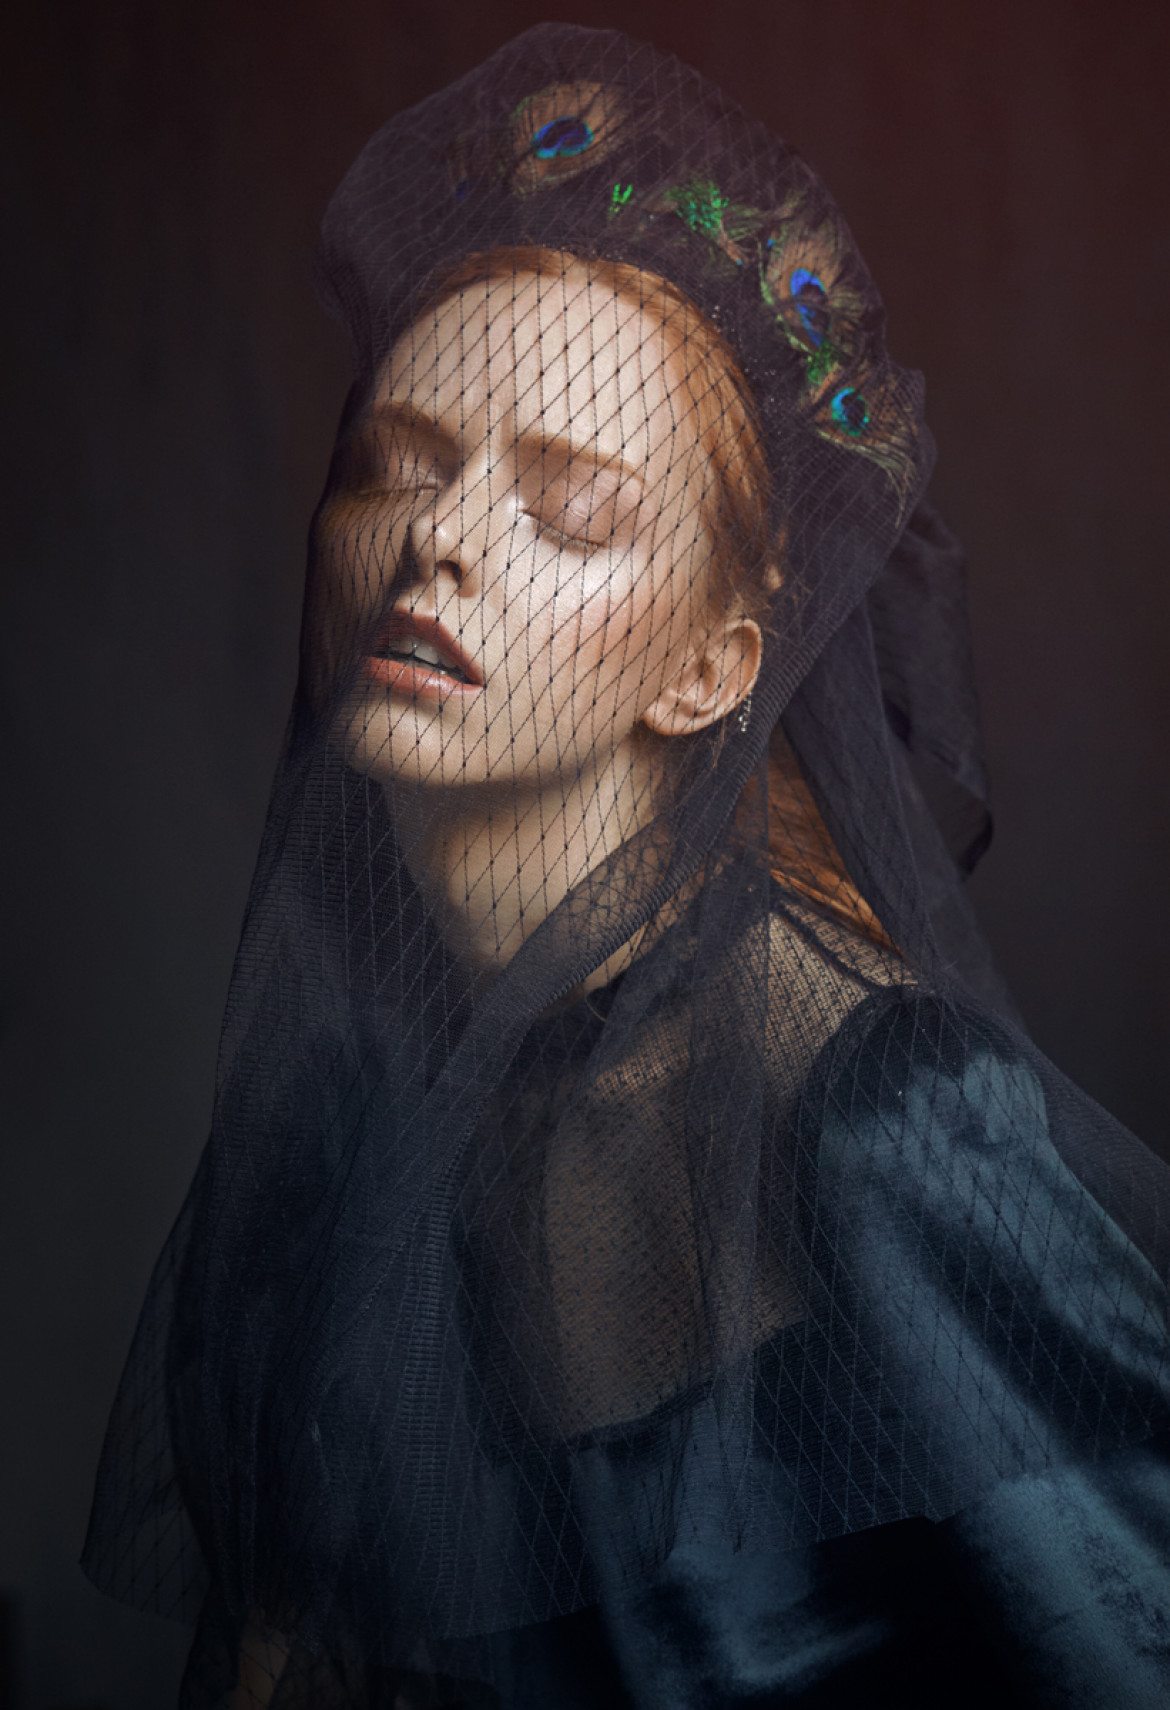 1 miejsce: Fashion and Beauty - Natalia Yankelevich